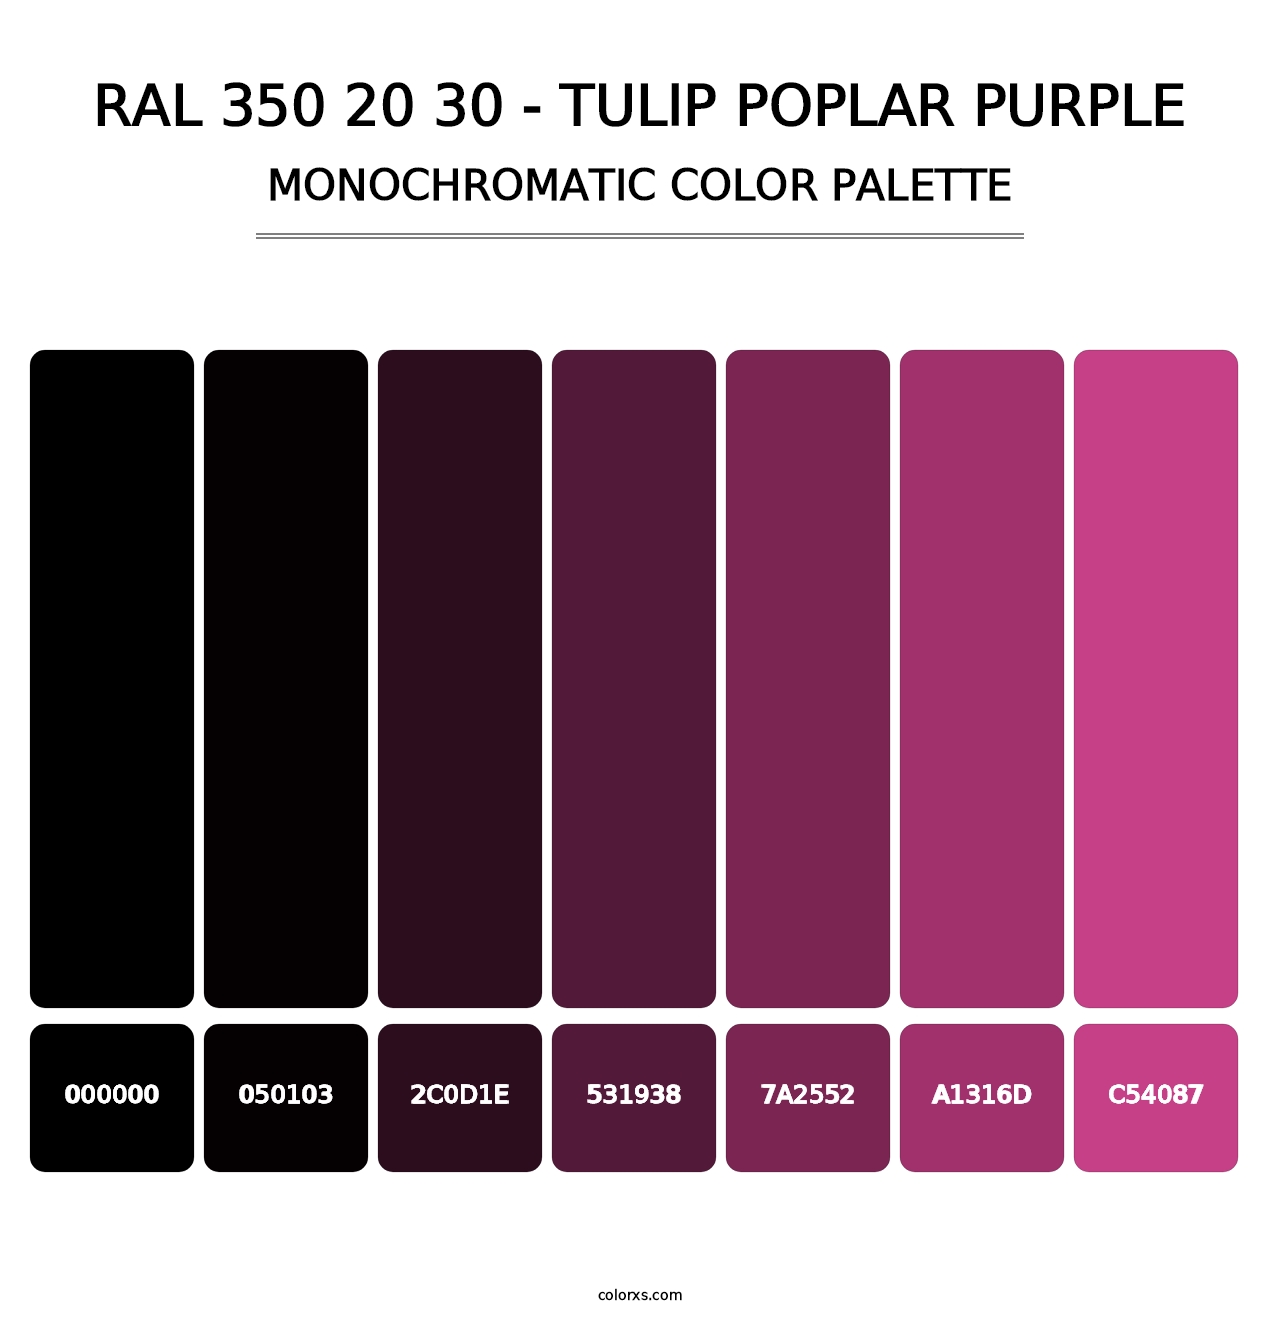 RAL 350 20 30 - Tulip Poplar Purple - Monochromatic Color Palette